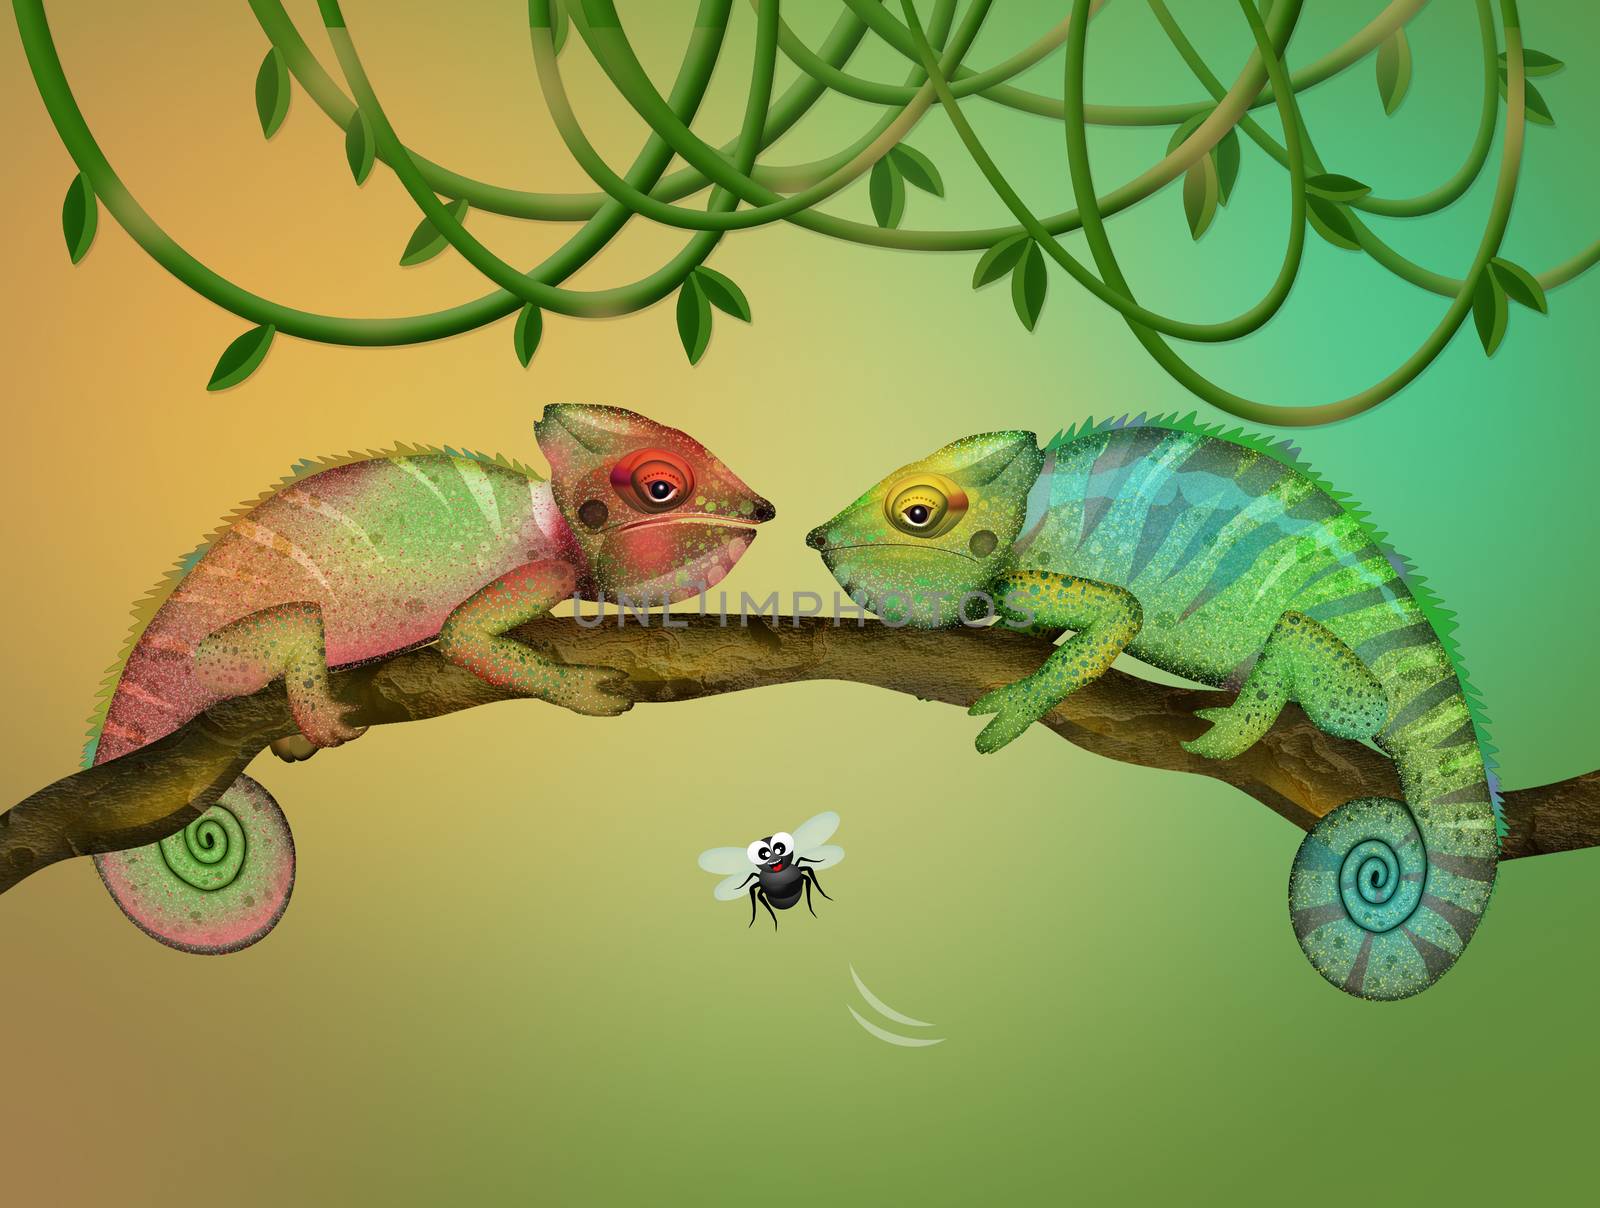 illustration of two chameleons on the branch